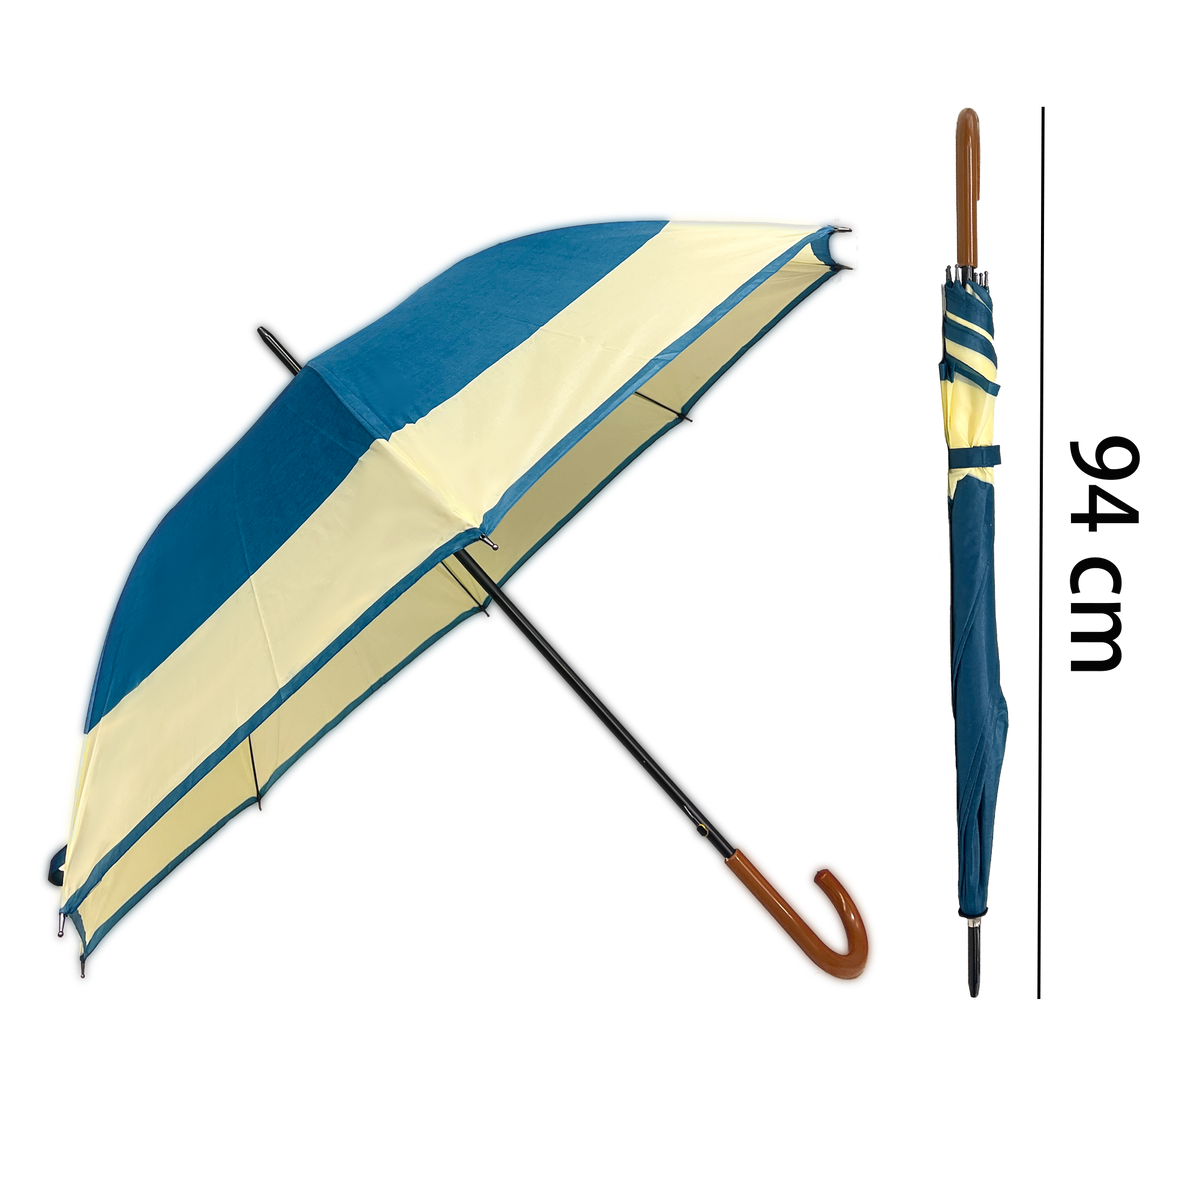 Classic Umbrella με αυτόματο άνοιγμα - Καμπύλη ξύλινη λαβή και ευρύ άνοιγμα